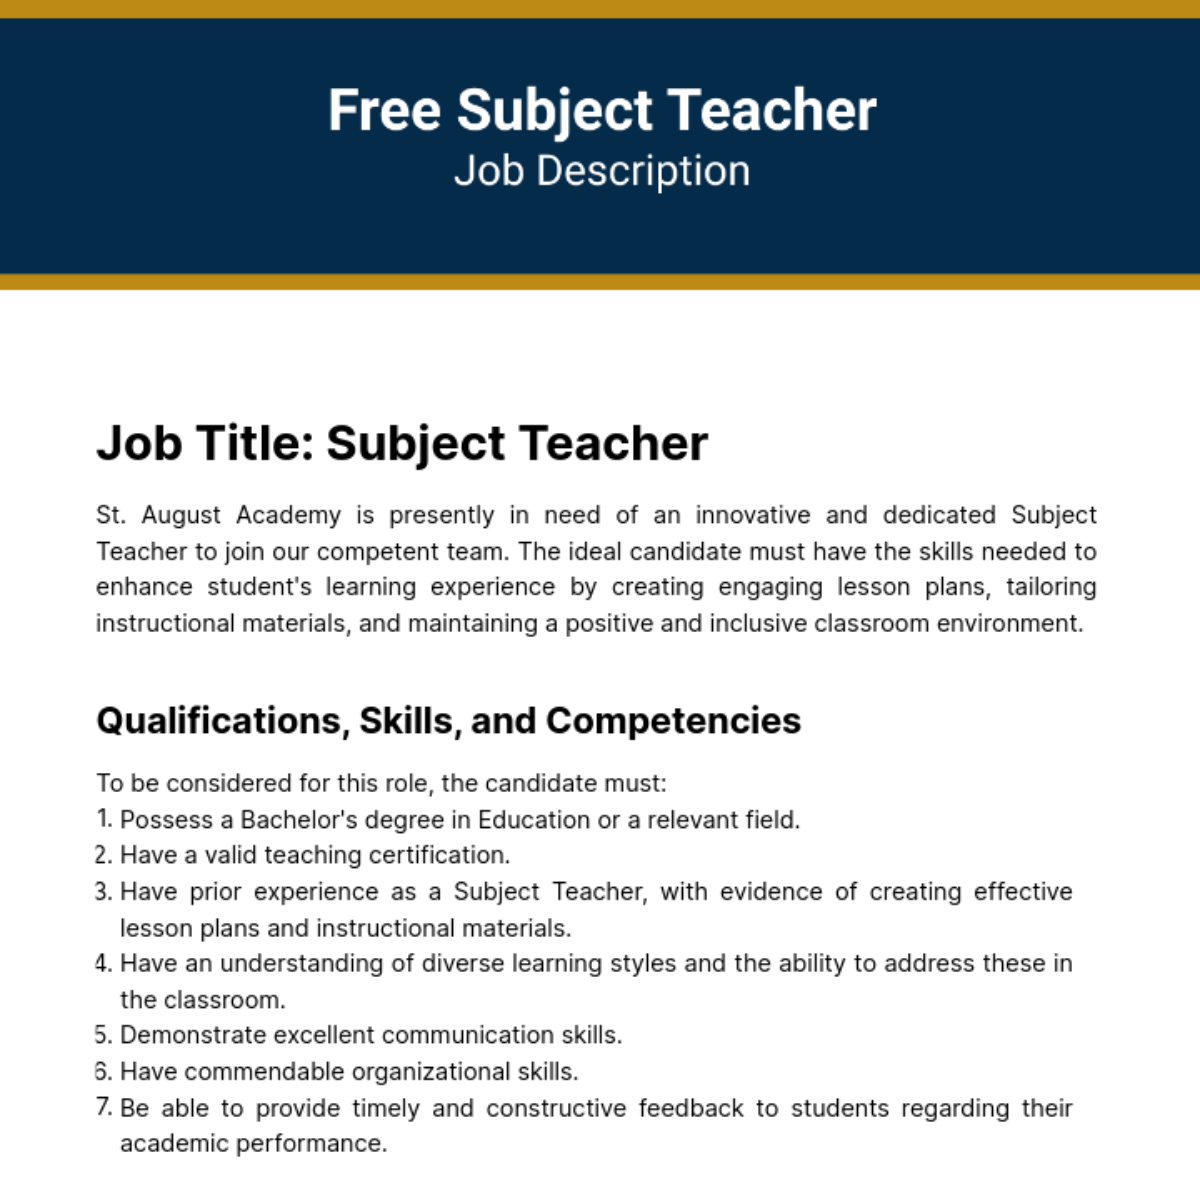 Free Subject Teacher Job Description Template